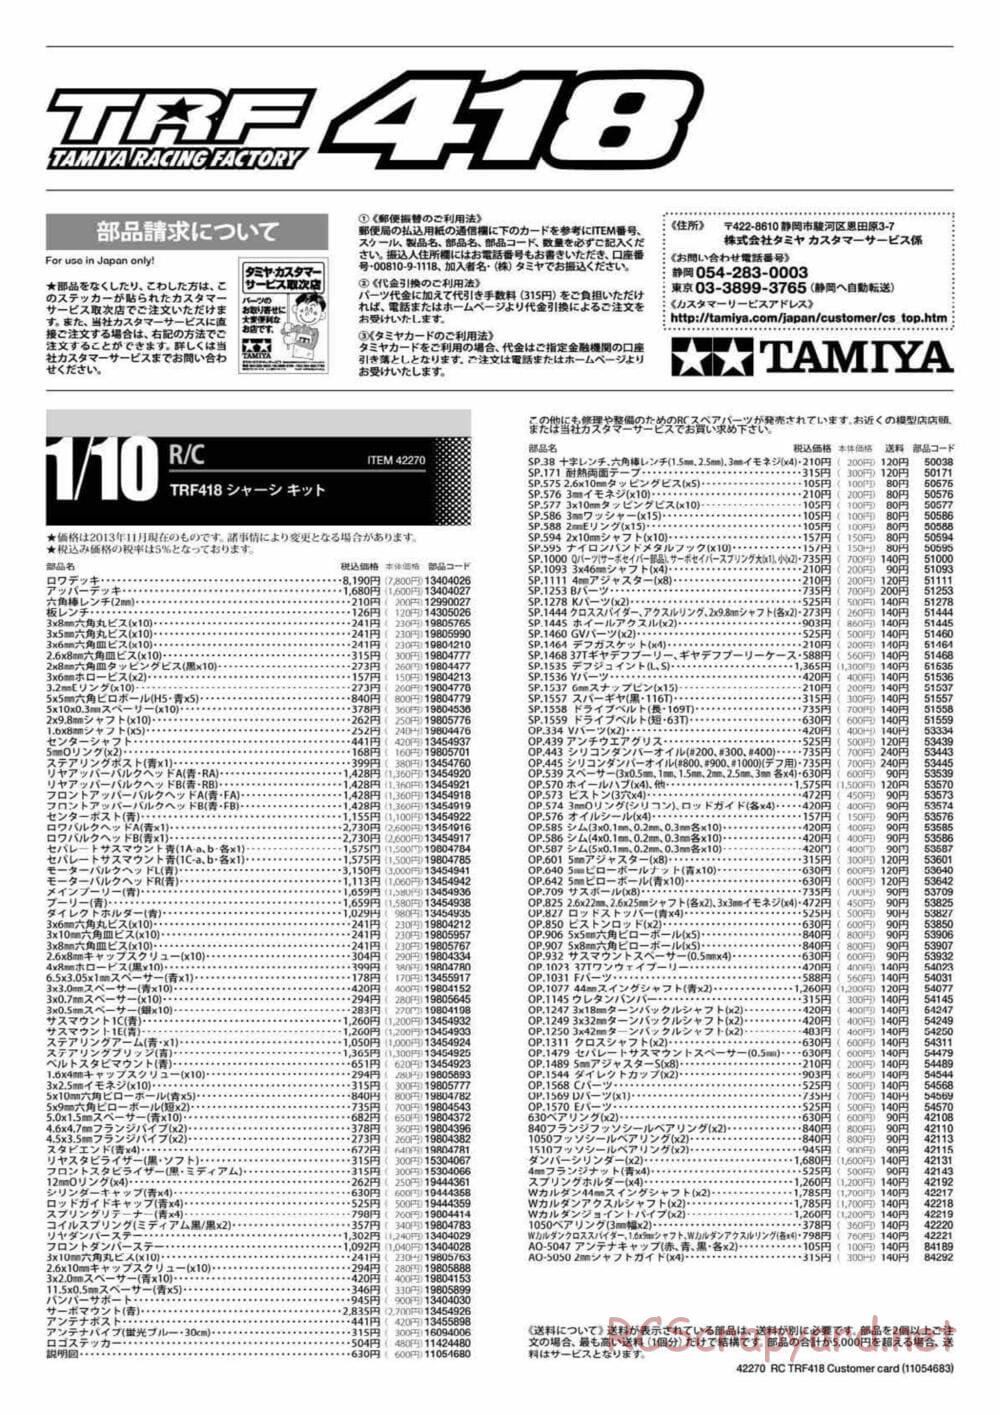 Tamiya - TRF418 Chassis - Manual - Page 29